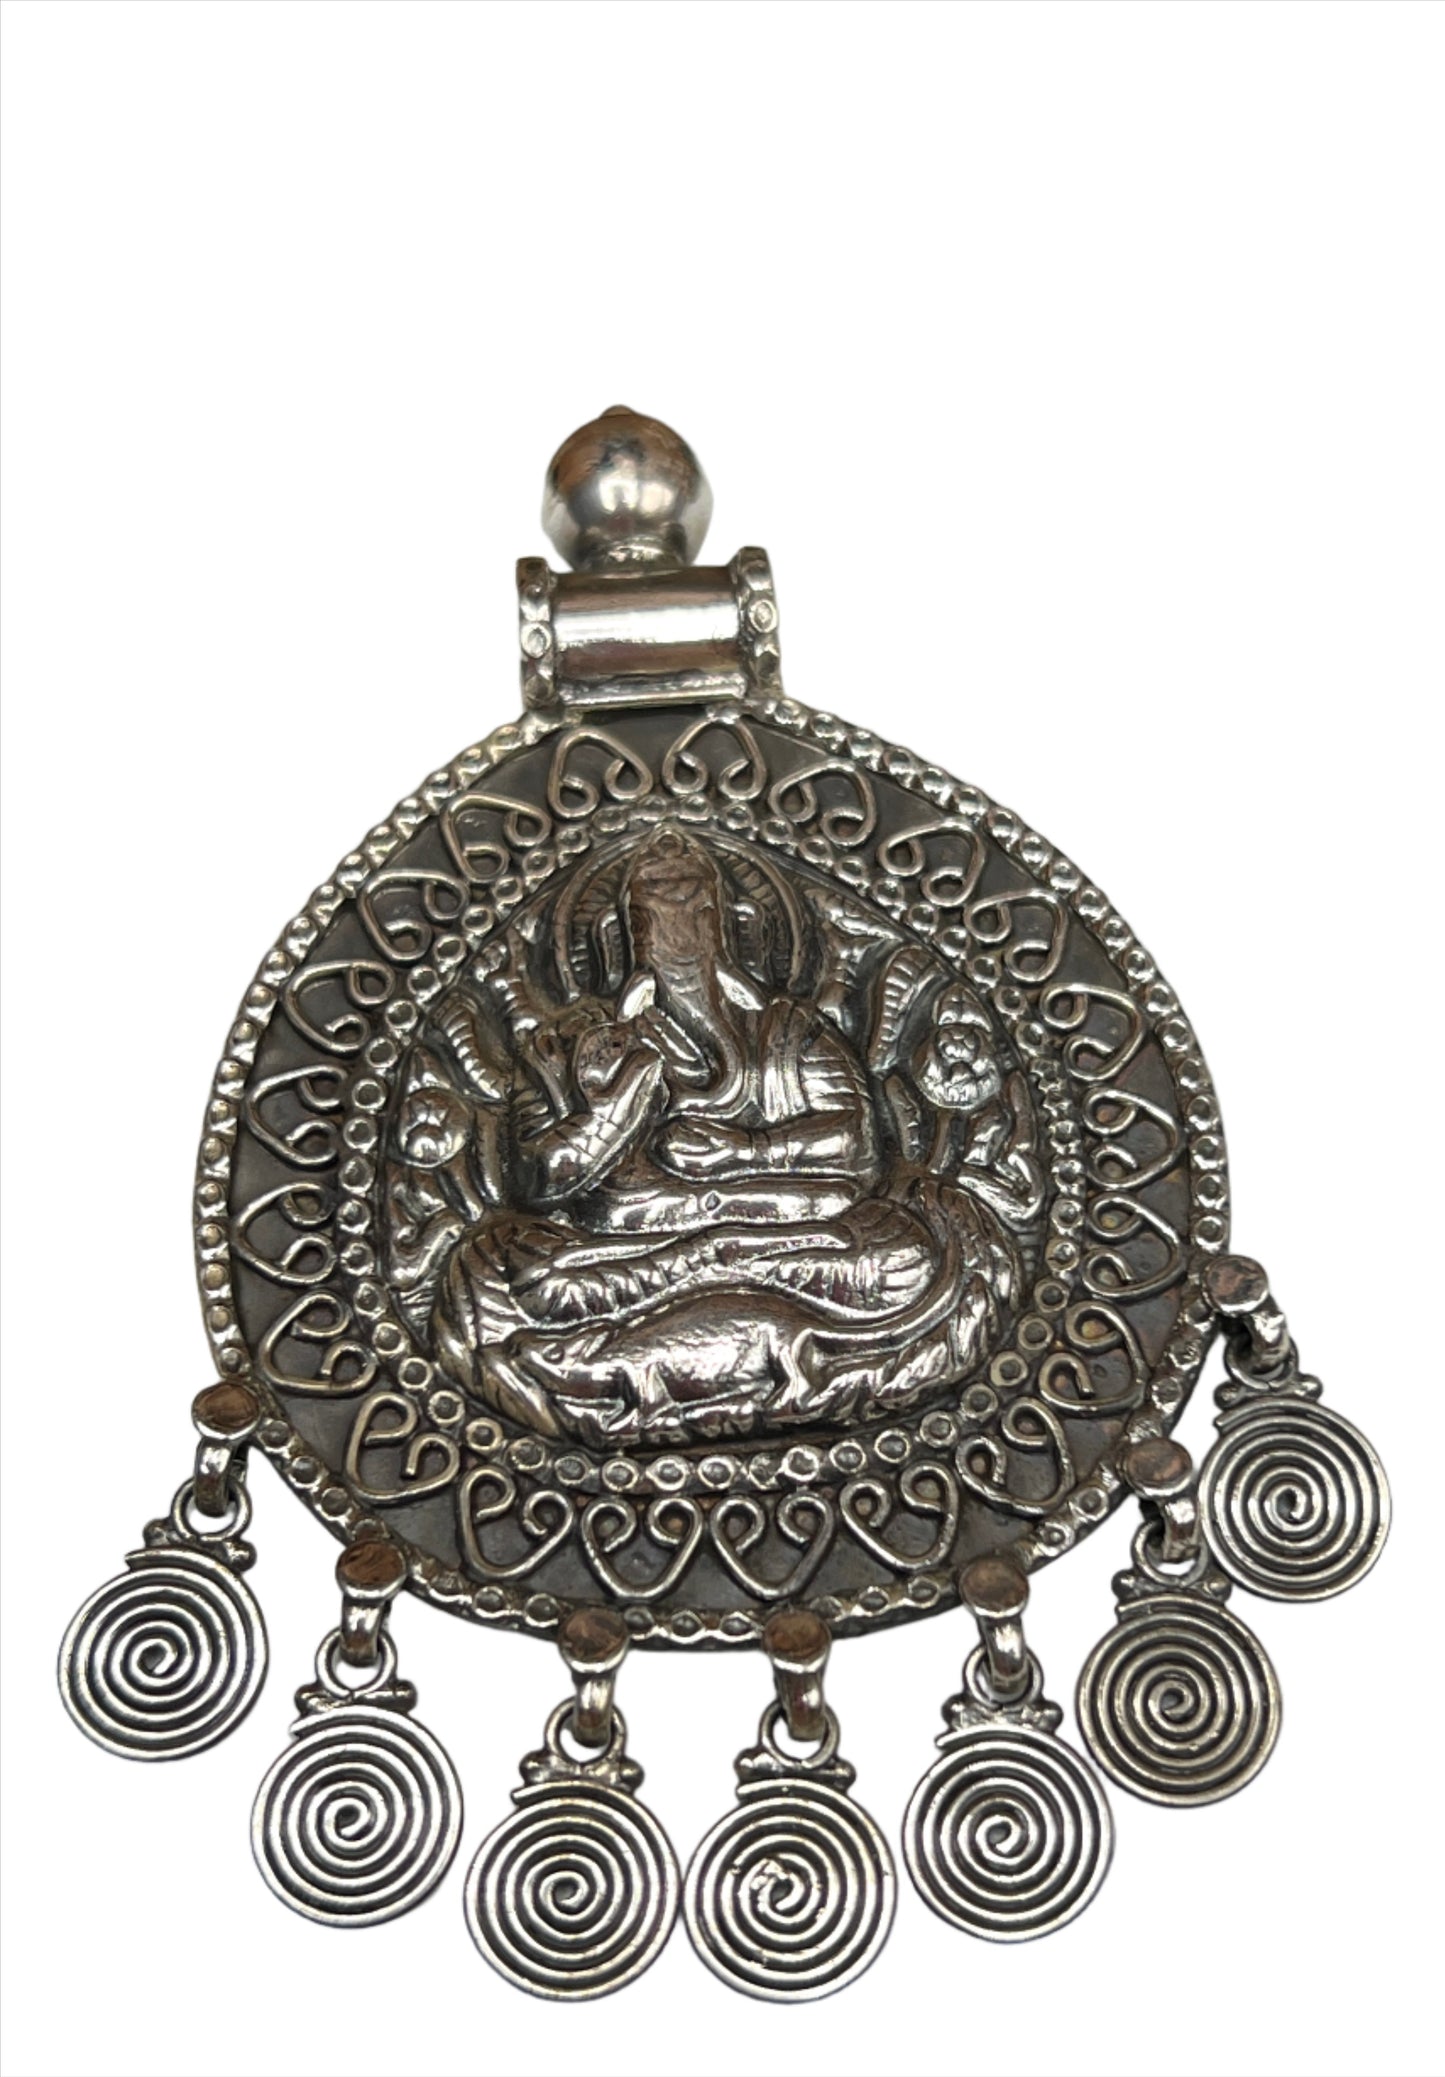 Large Tribal Ganesh Pendants